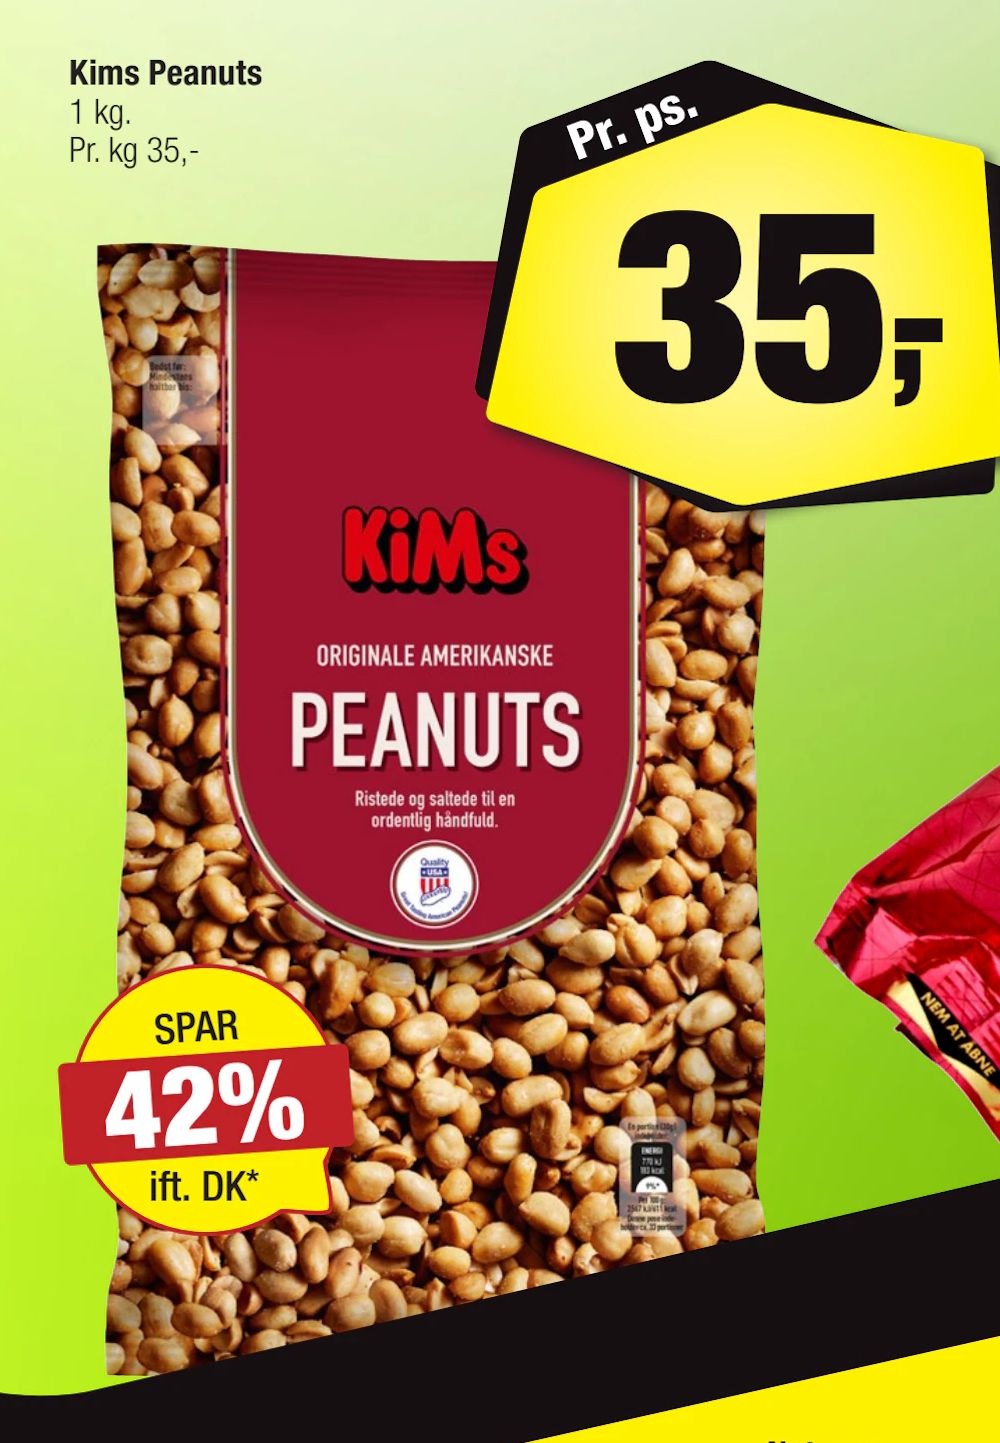 Tilbud på Kims Peanuts fra Calle til 35 kr.